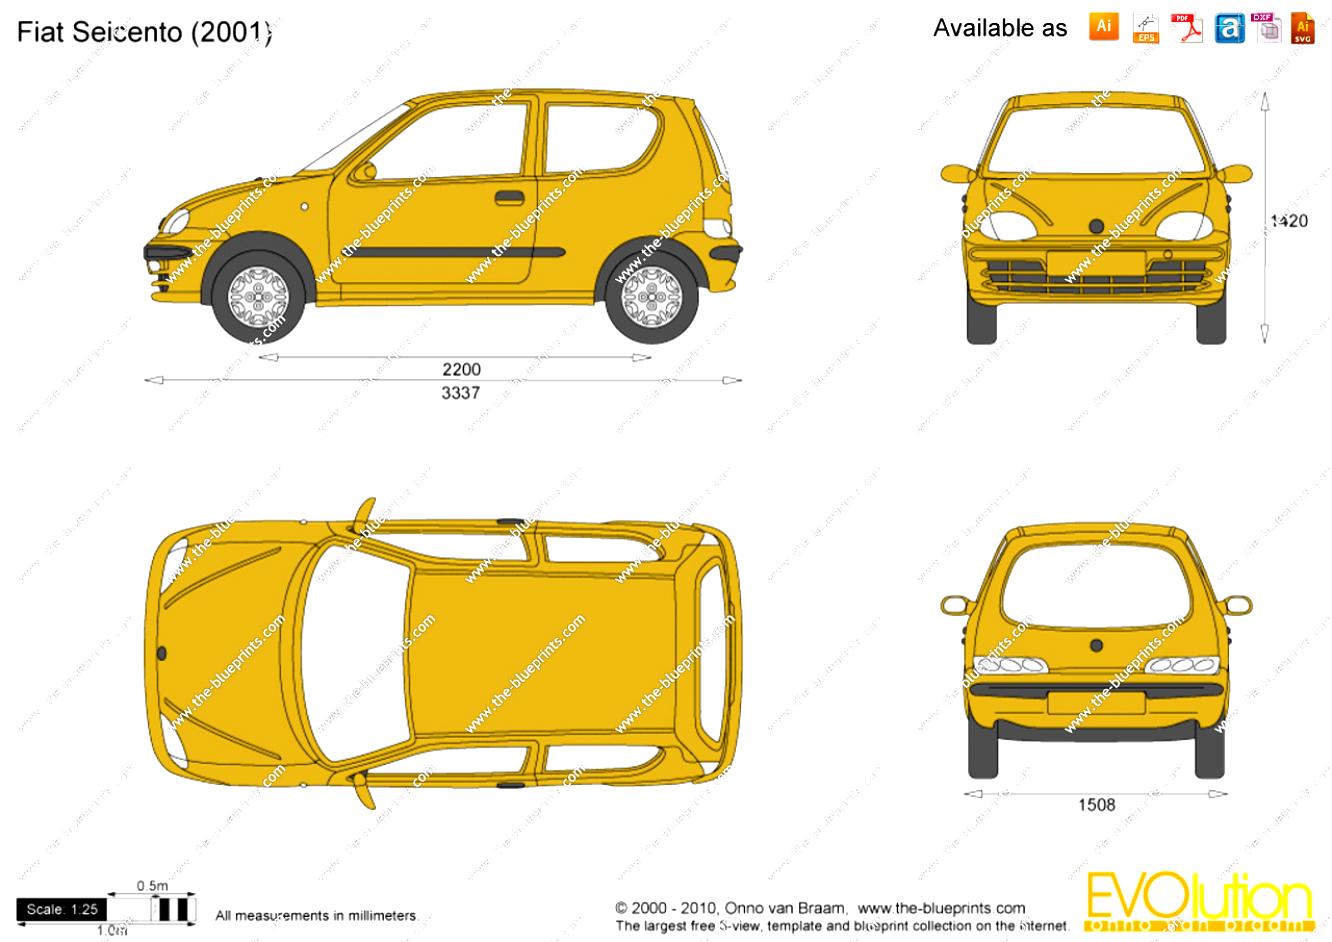 Fiat Seicento 2004 #29